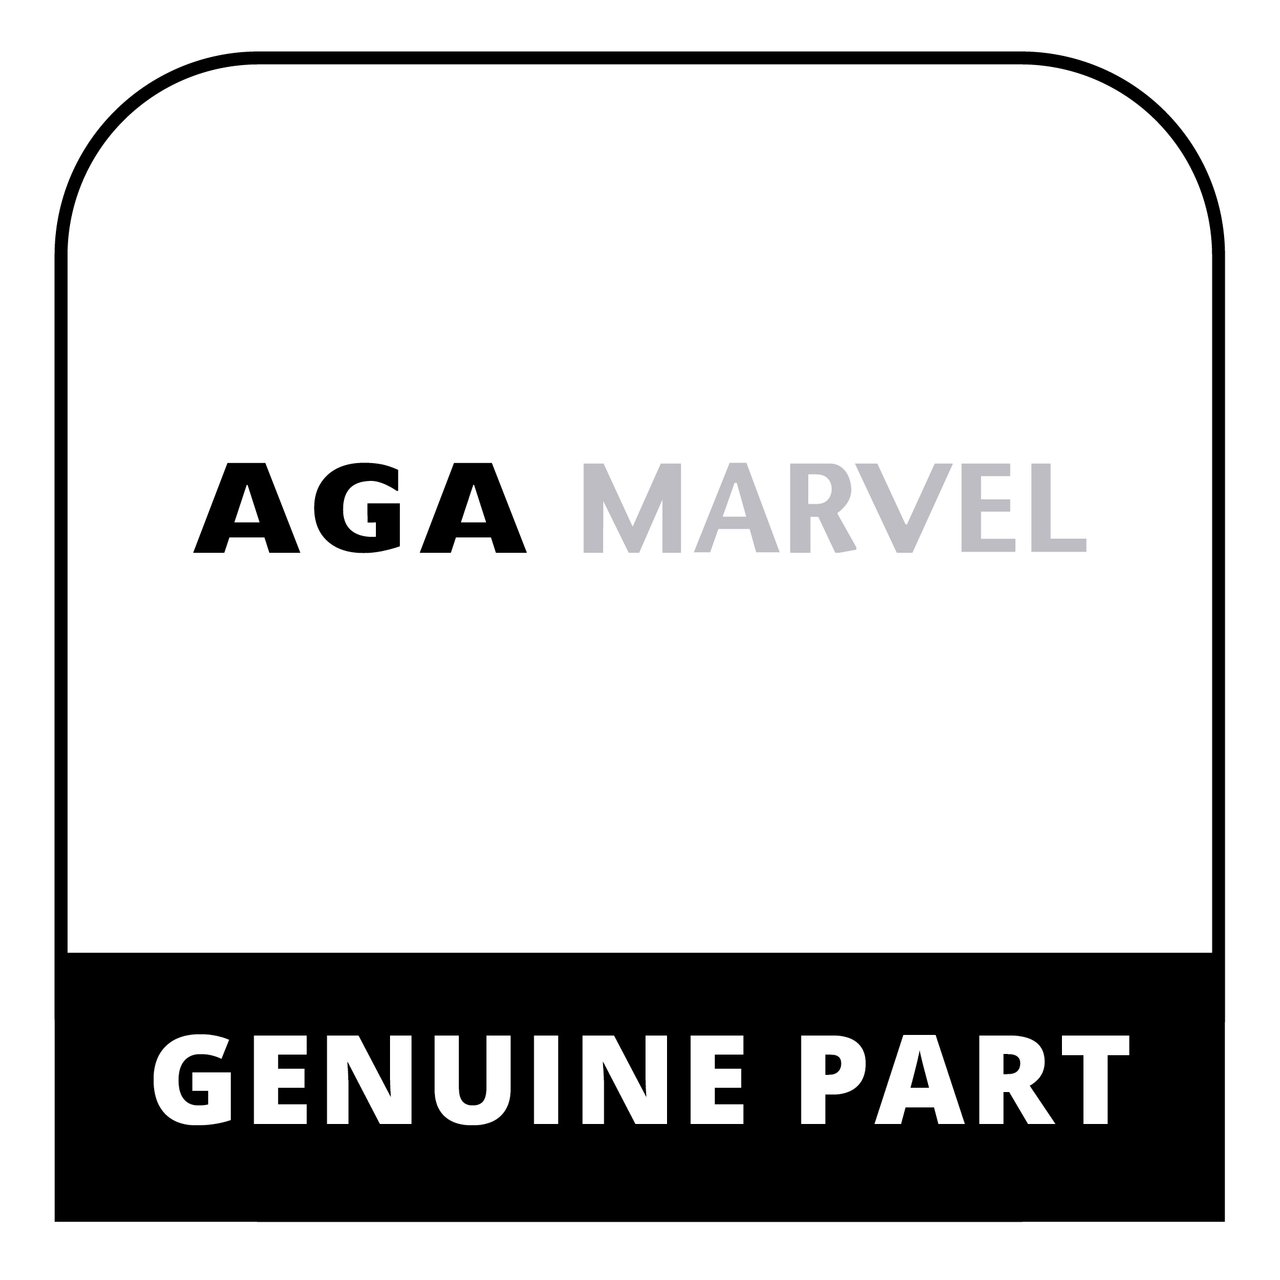 AGA Marvel AG4M210459 - Cable Guide Tube Clip - Genuine AGA Marvel Part